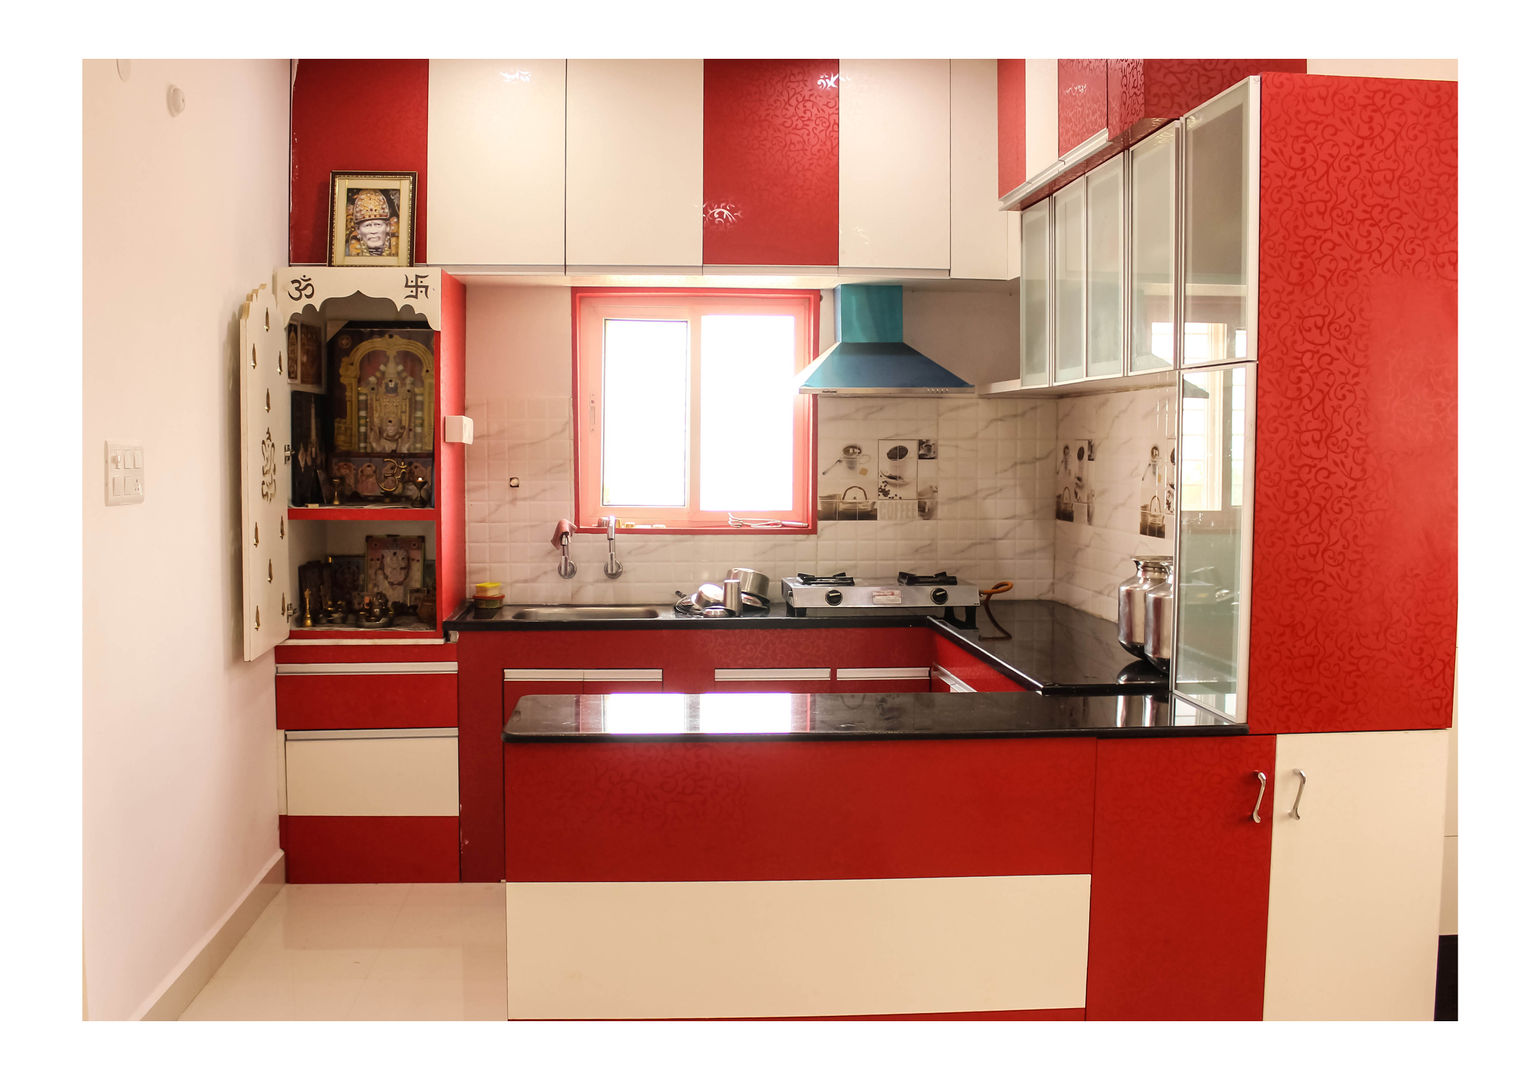 2 Bedroom Flat at Manikonda, Happy Homes Designers Happy Homes Designers Kitchen Cabinets & shelves